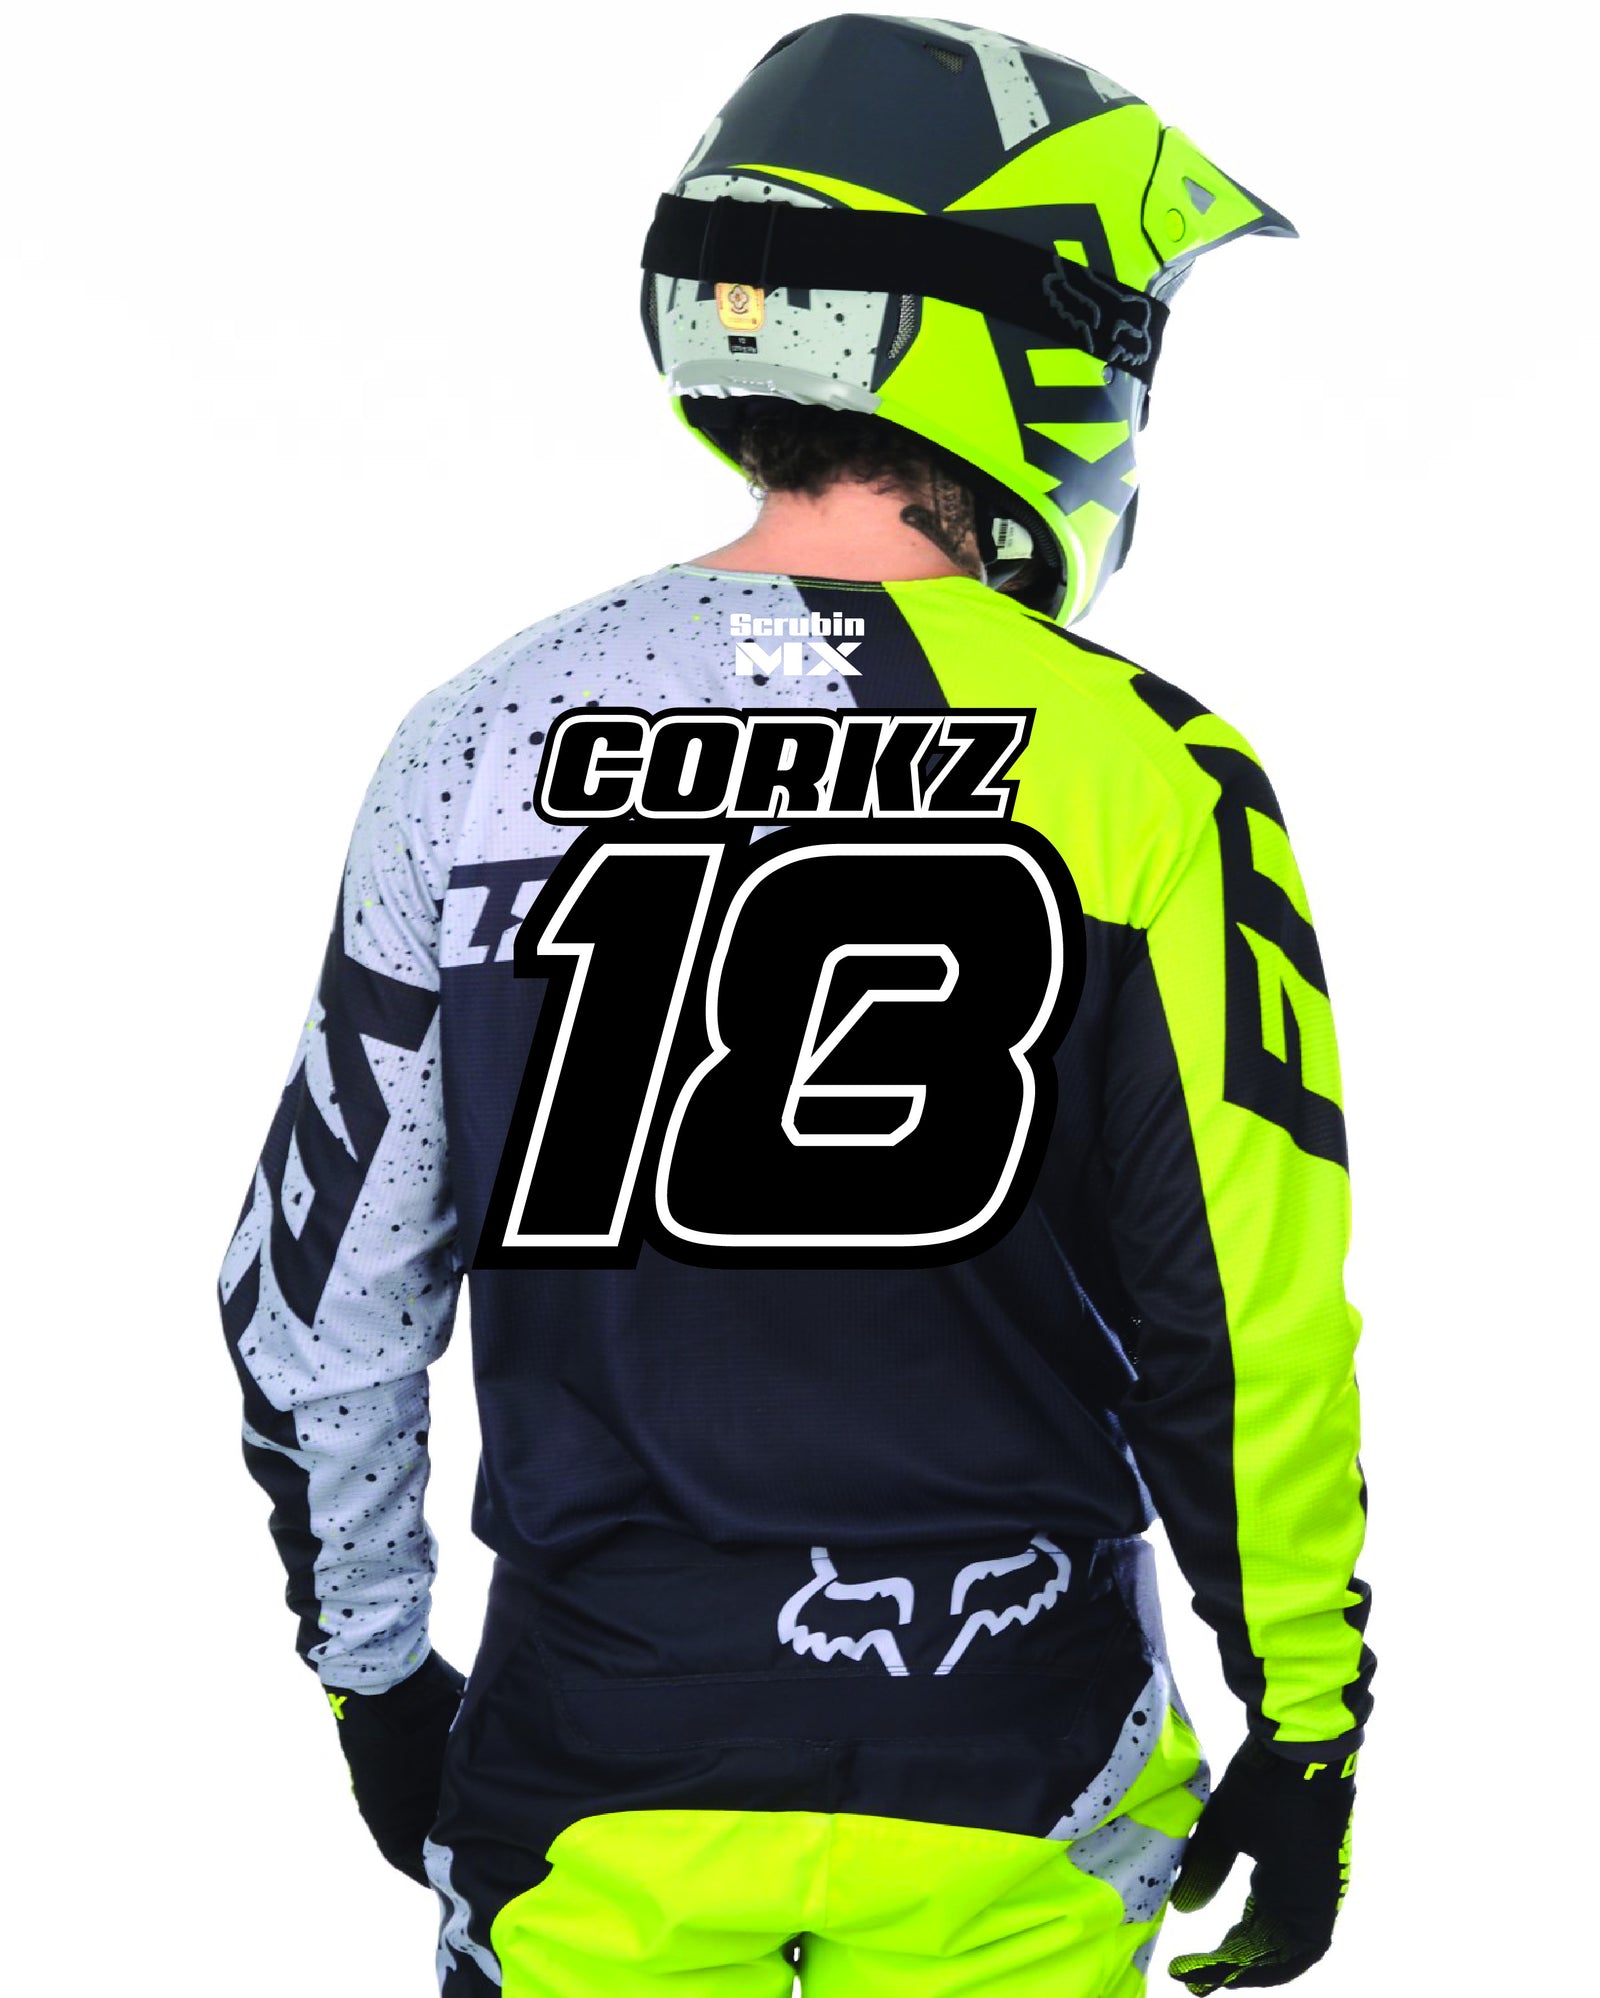 customized motocross jersey